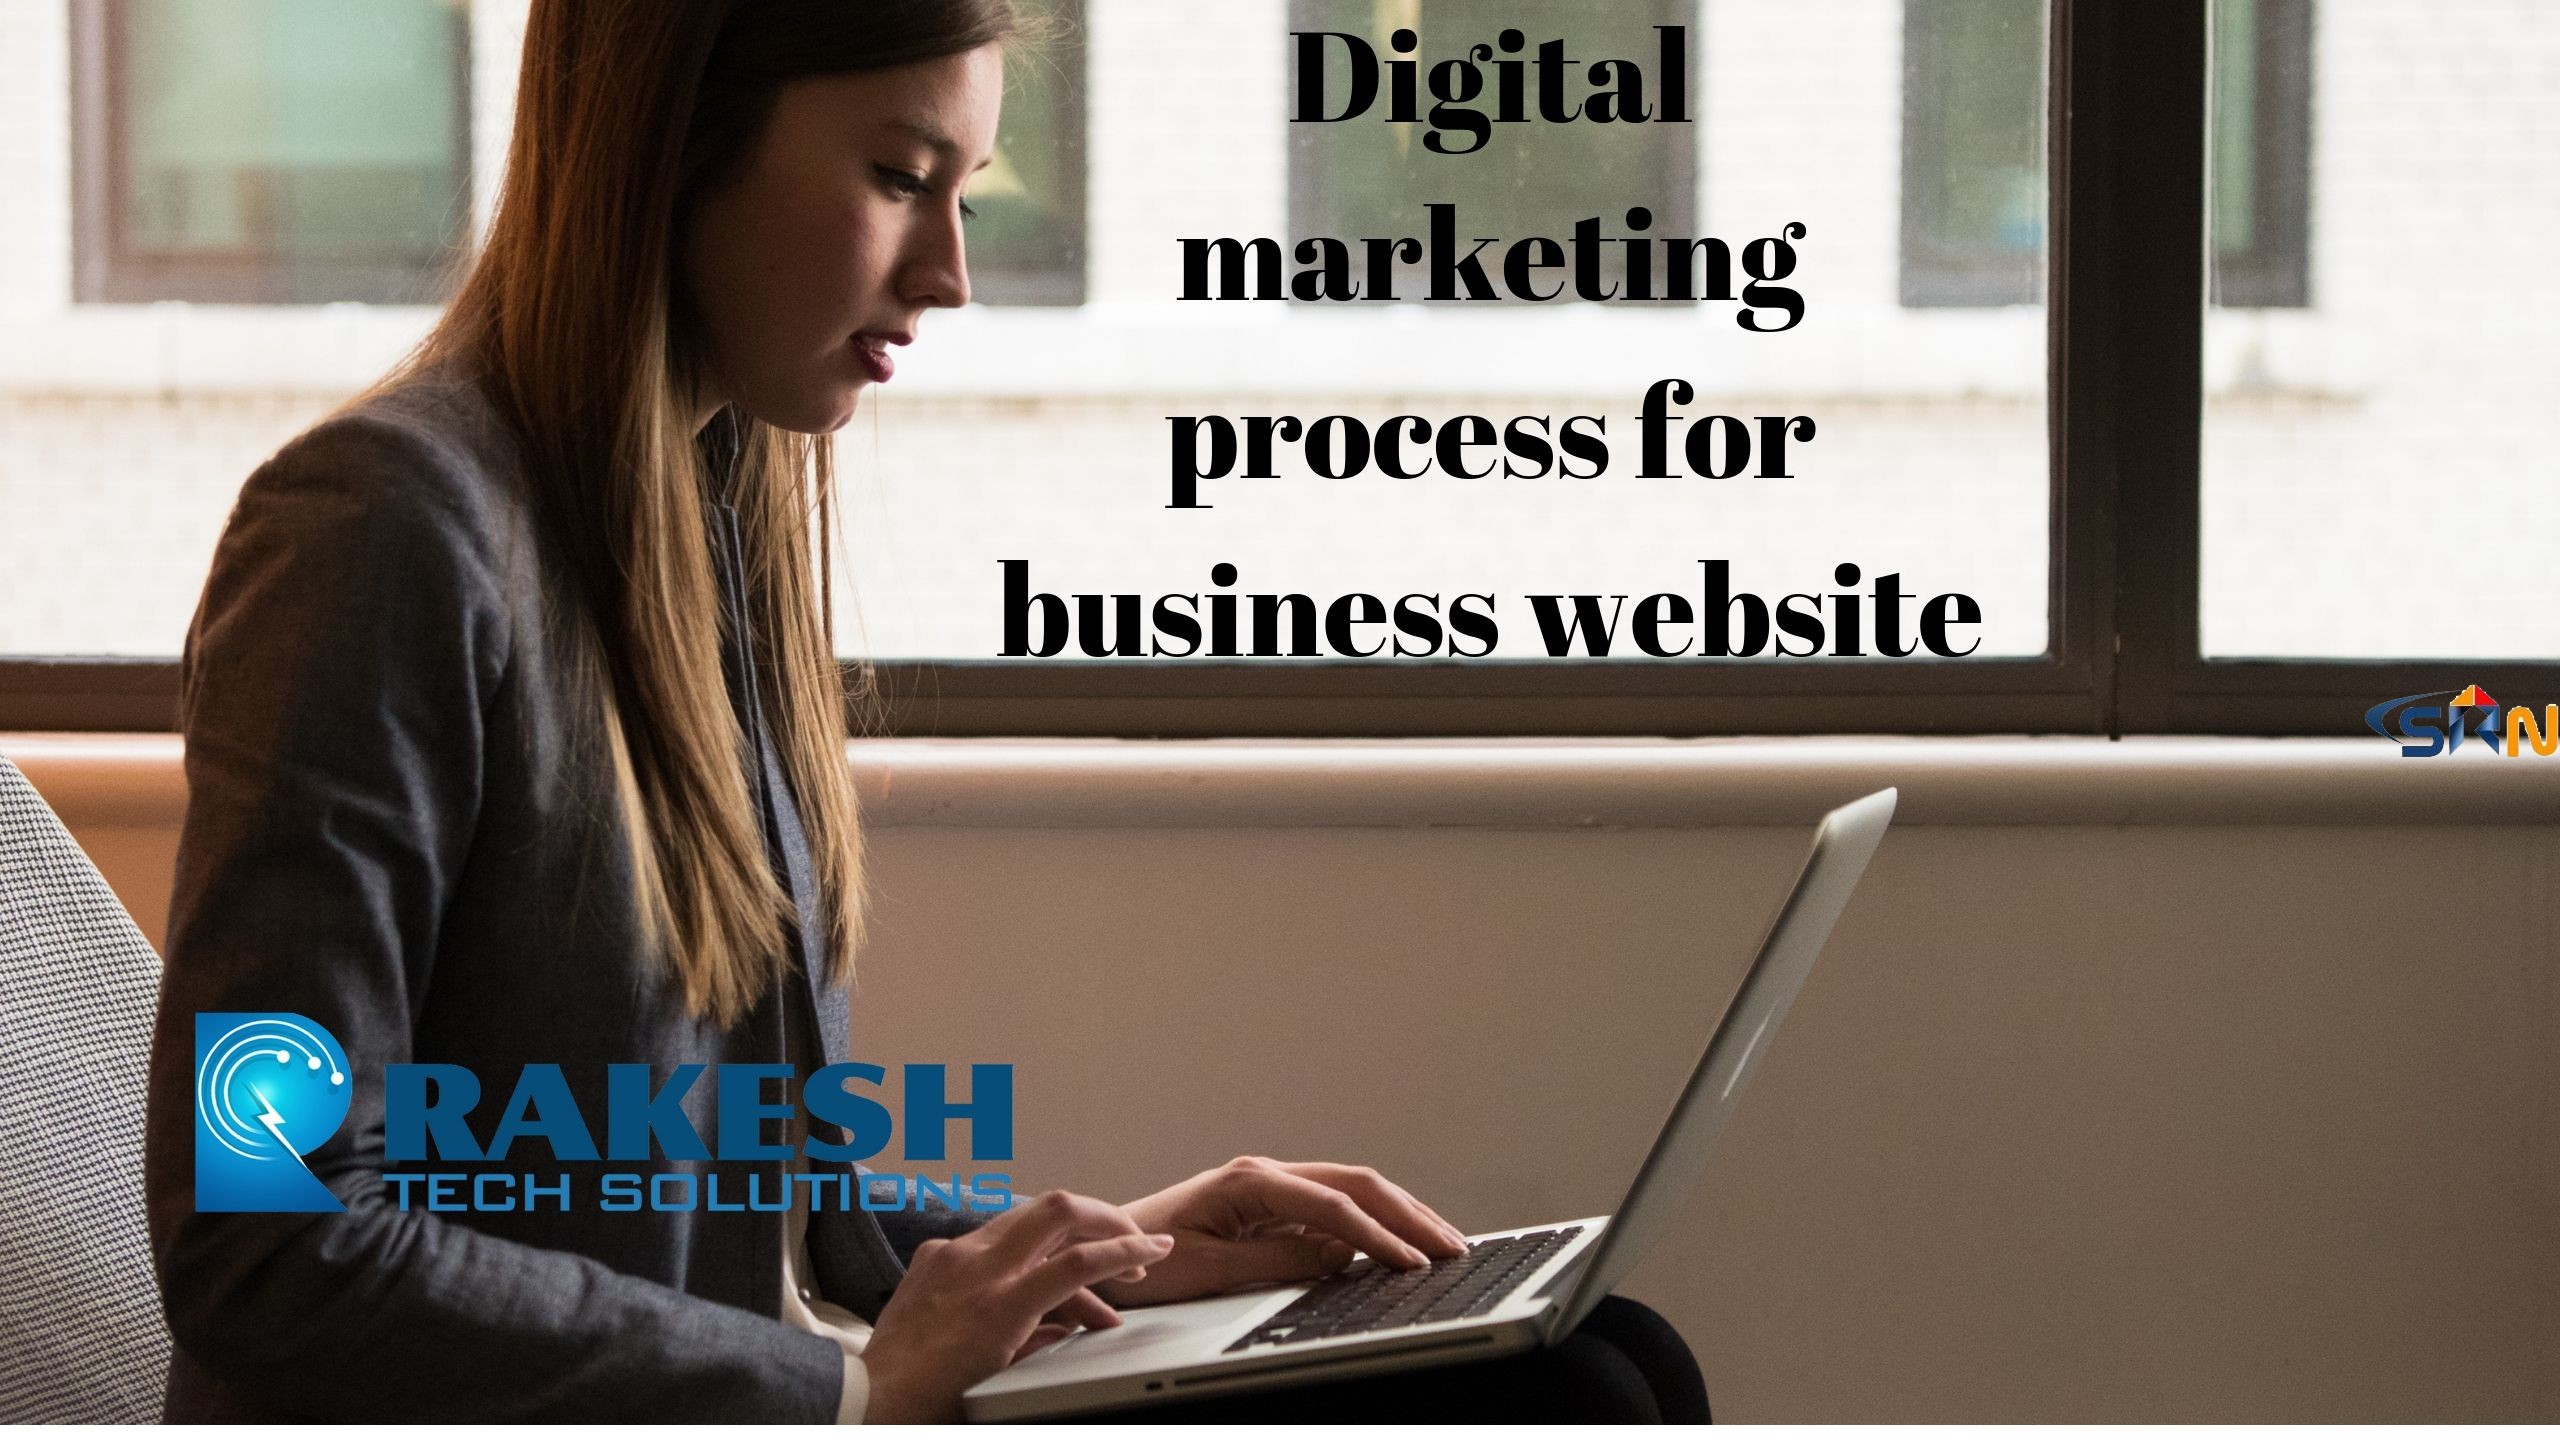 Digital marketing process for business website 2019